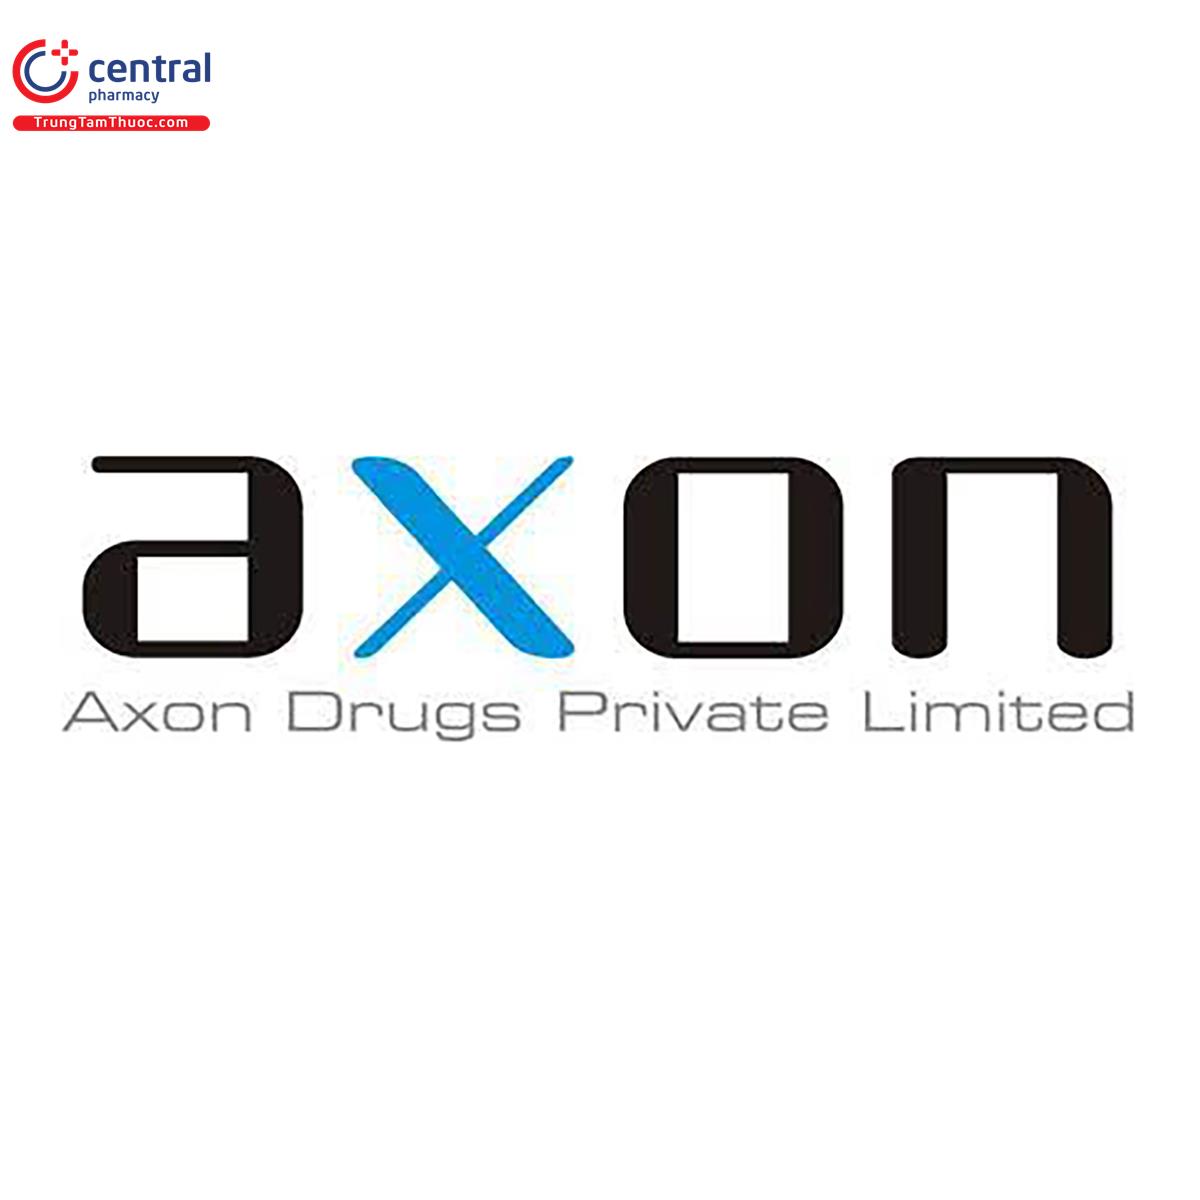 Axon Drugs